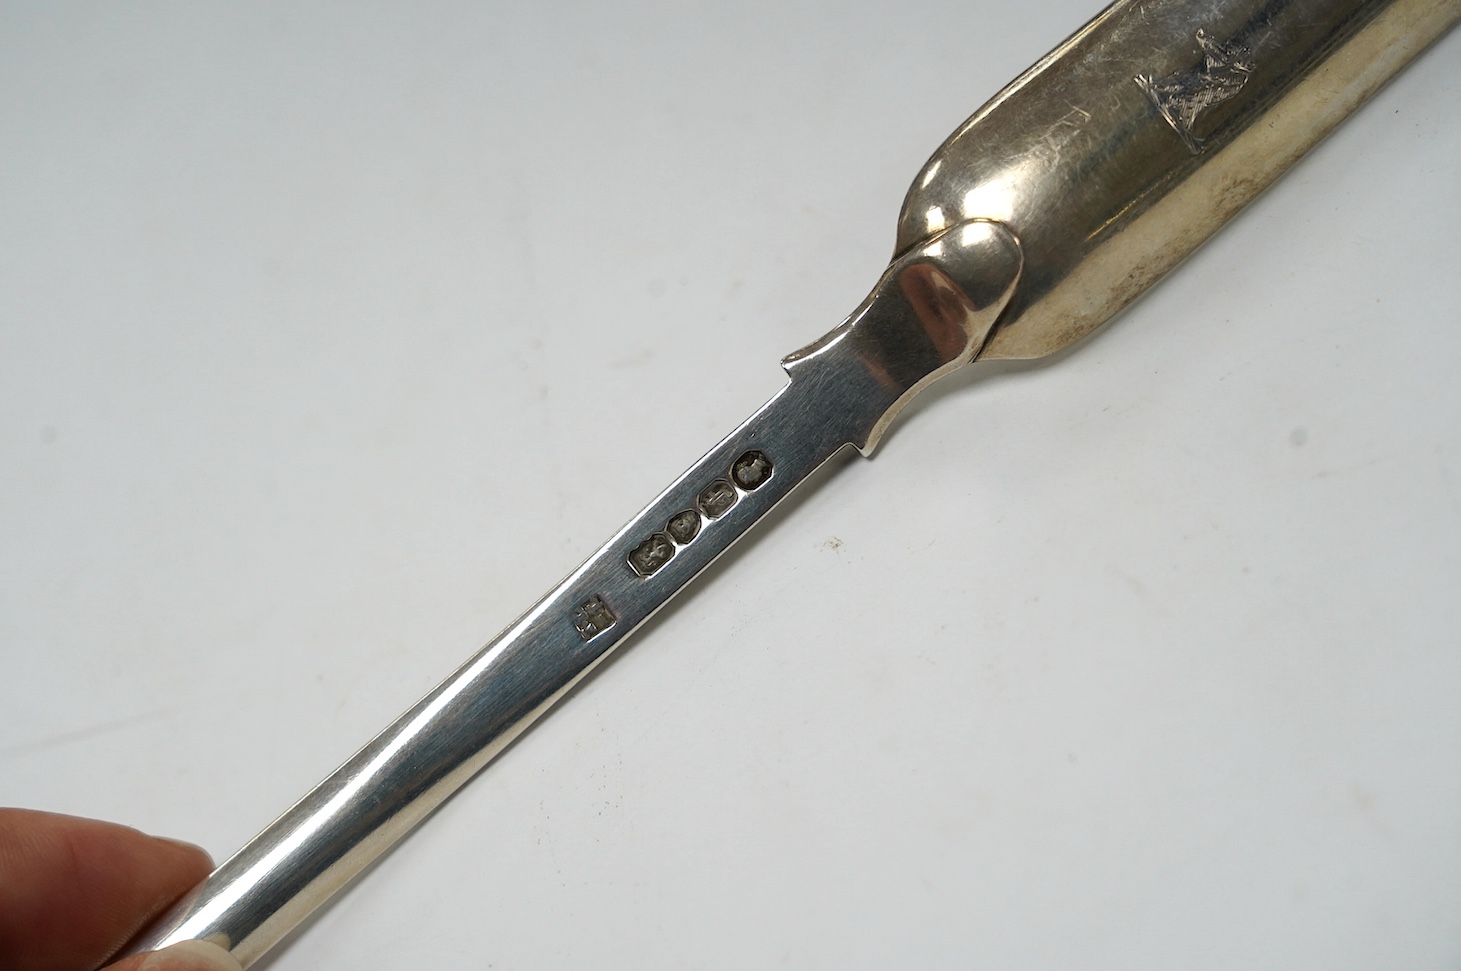 A Victorian silver marrow scoop by John & Henry Lias, London, 1841, 21.3cm, 45 grams. Condition - fair